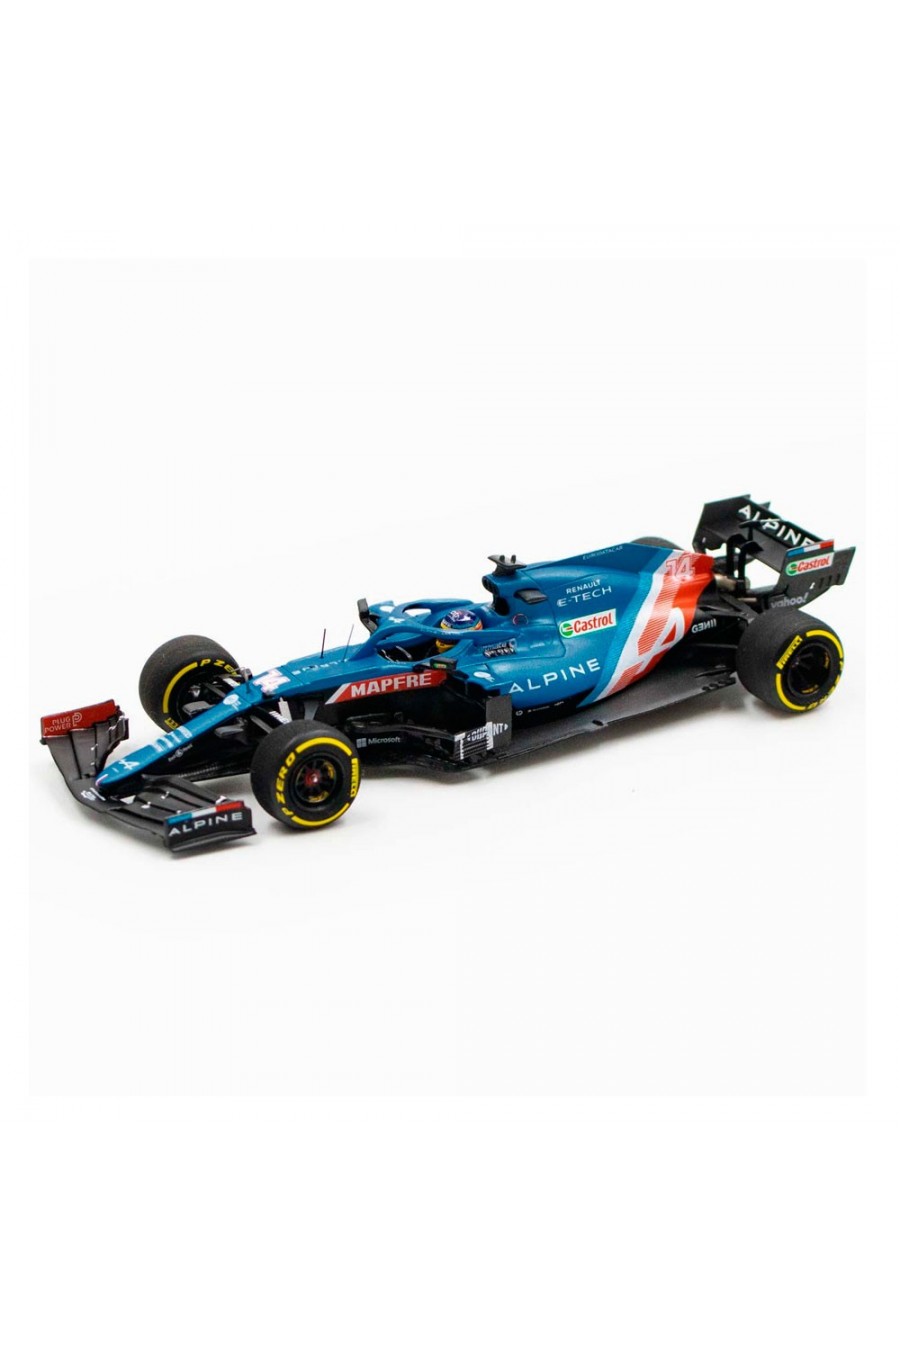 Miniatura 1:43 Coche Alpine A521 2021 'Fernando Alonso'. Disponible en azul, unisex